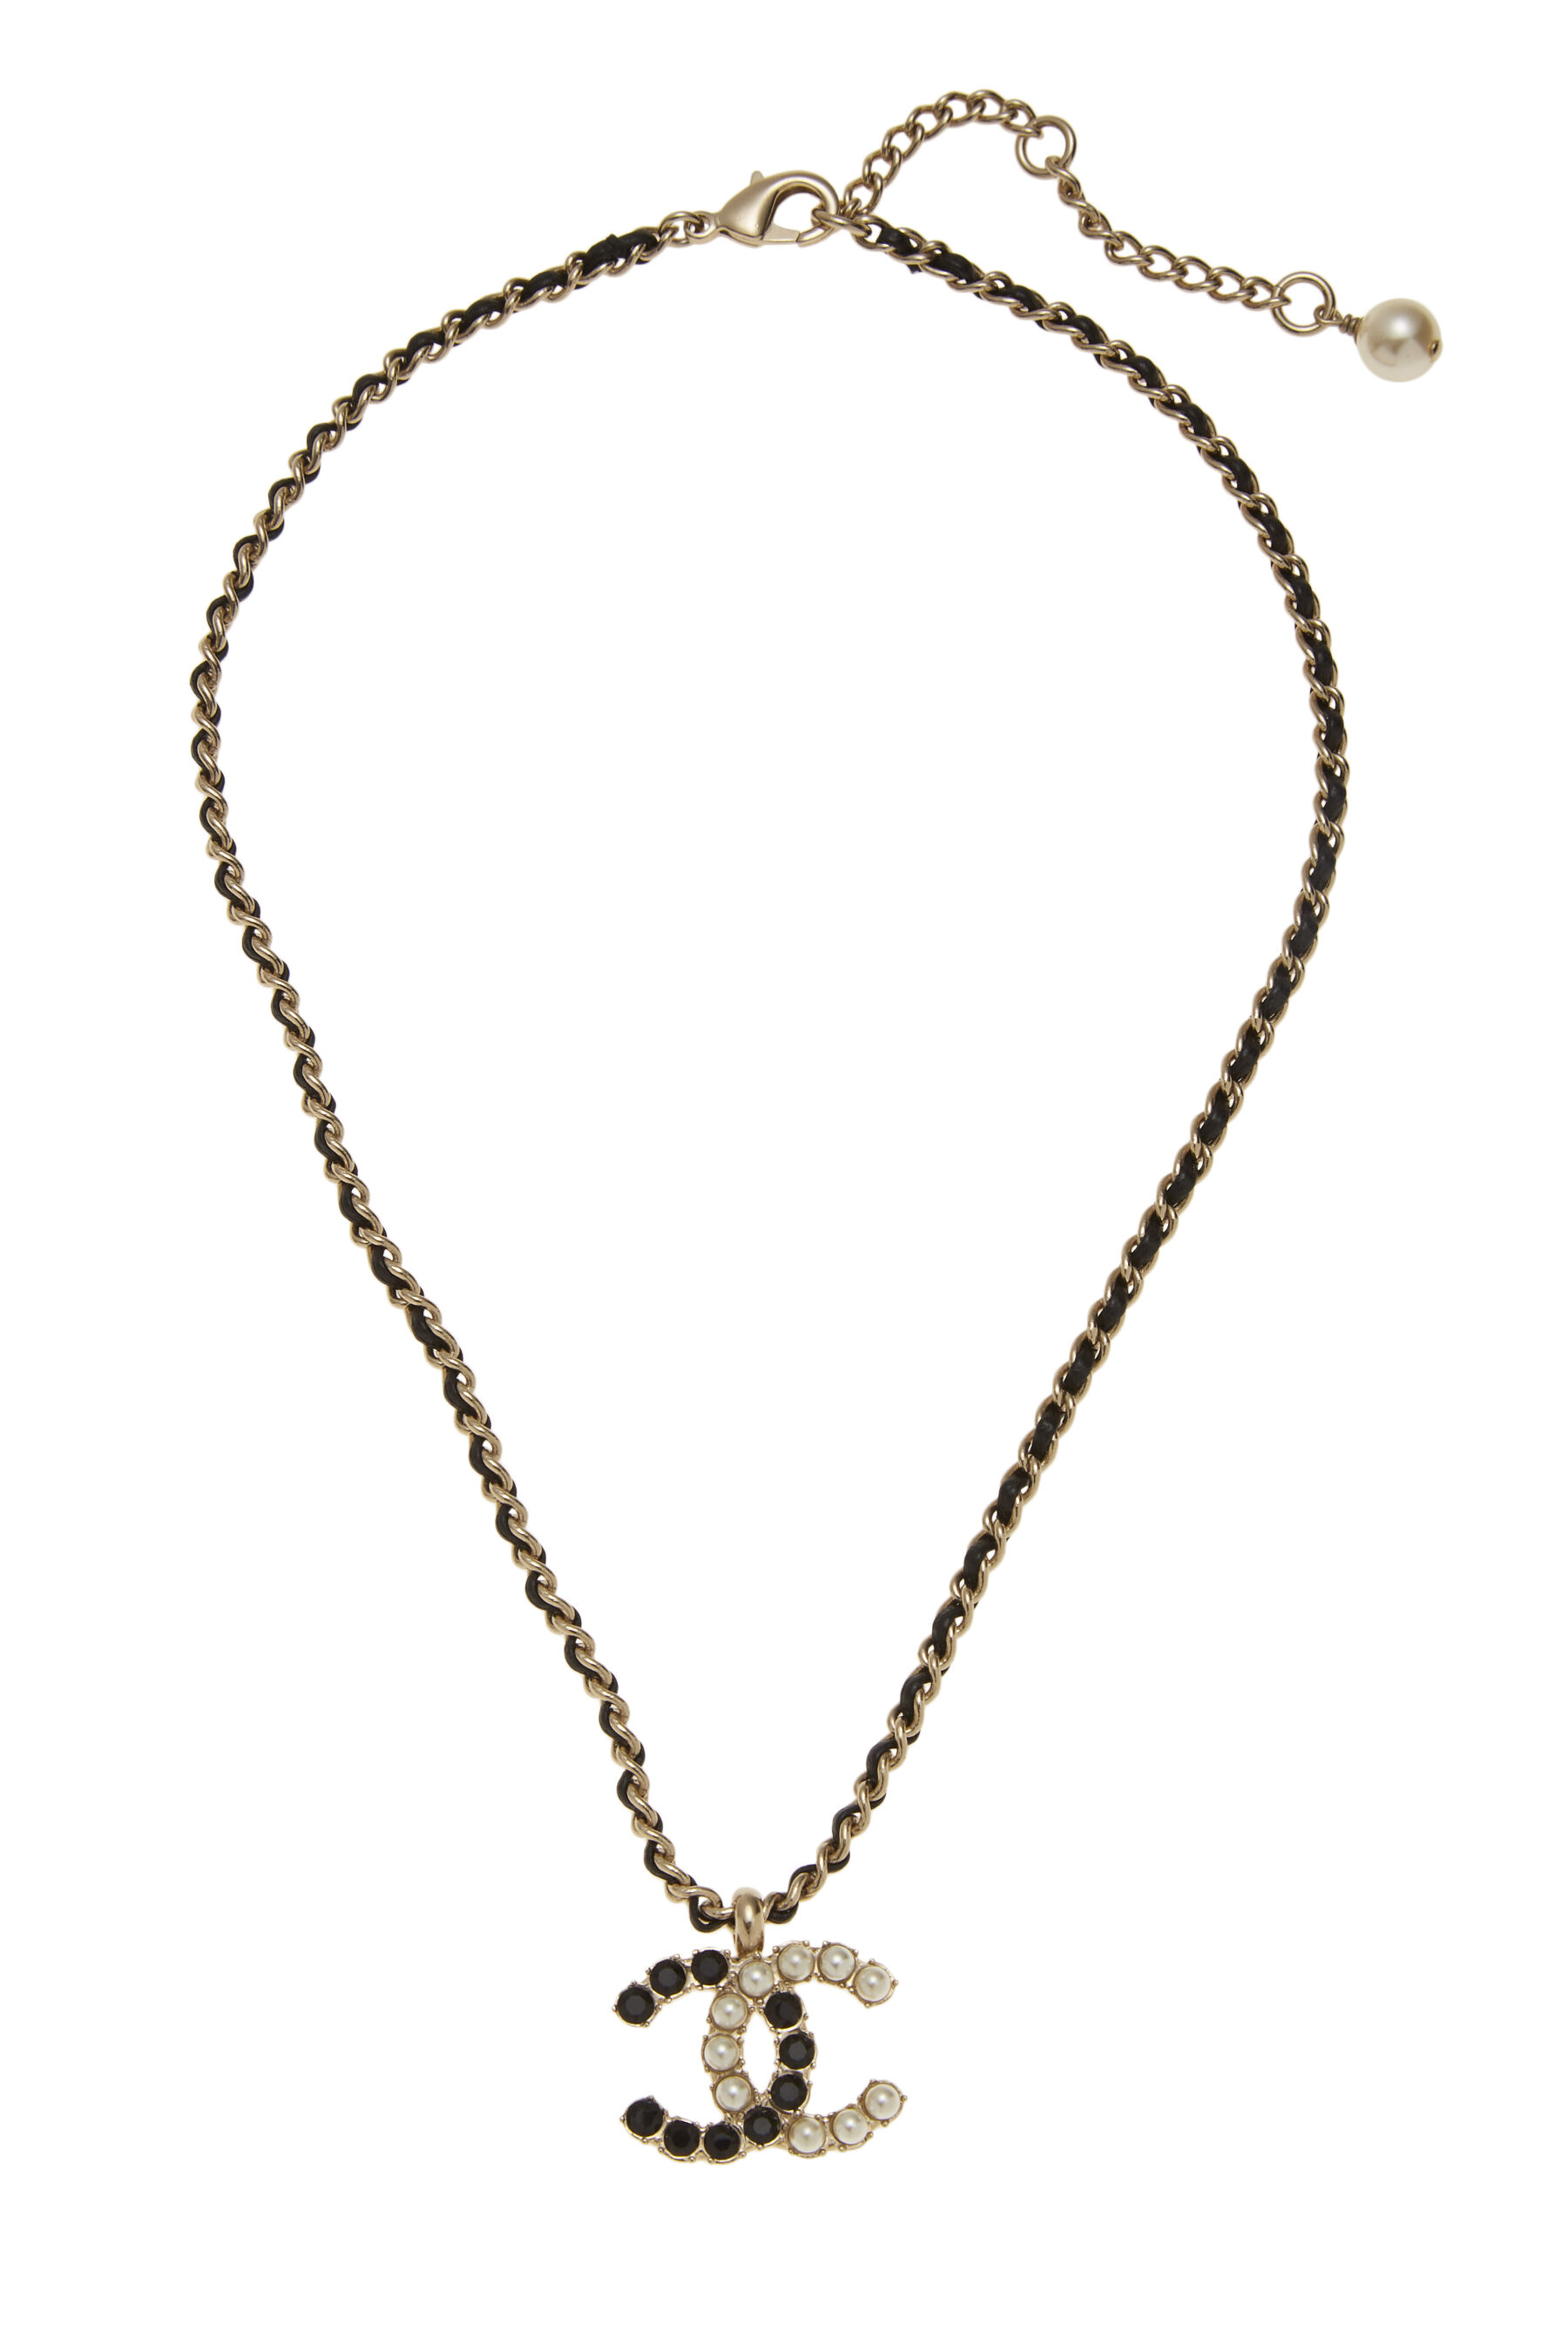 Chanel - Gold & Black Faux Pearl 'CC' Necklace